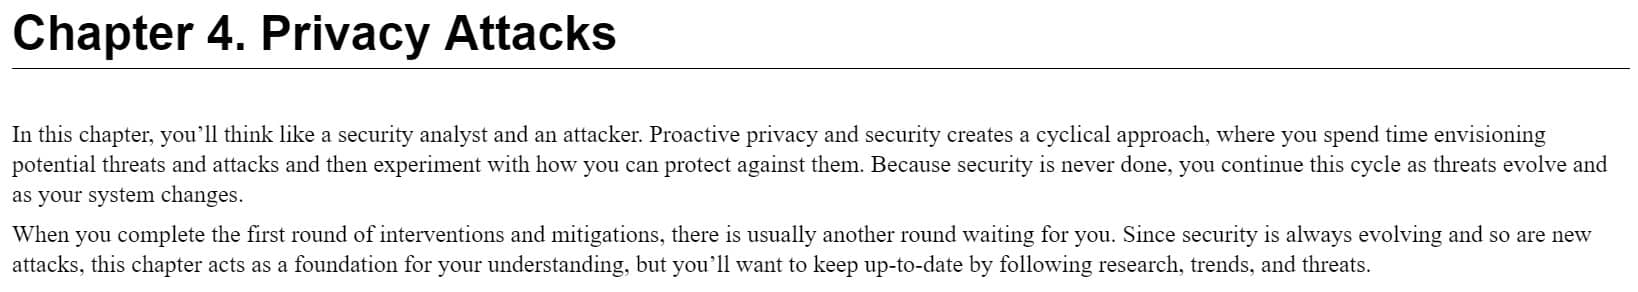 فصل 4 کتاب Practical Data Privacy